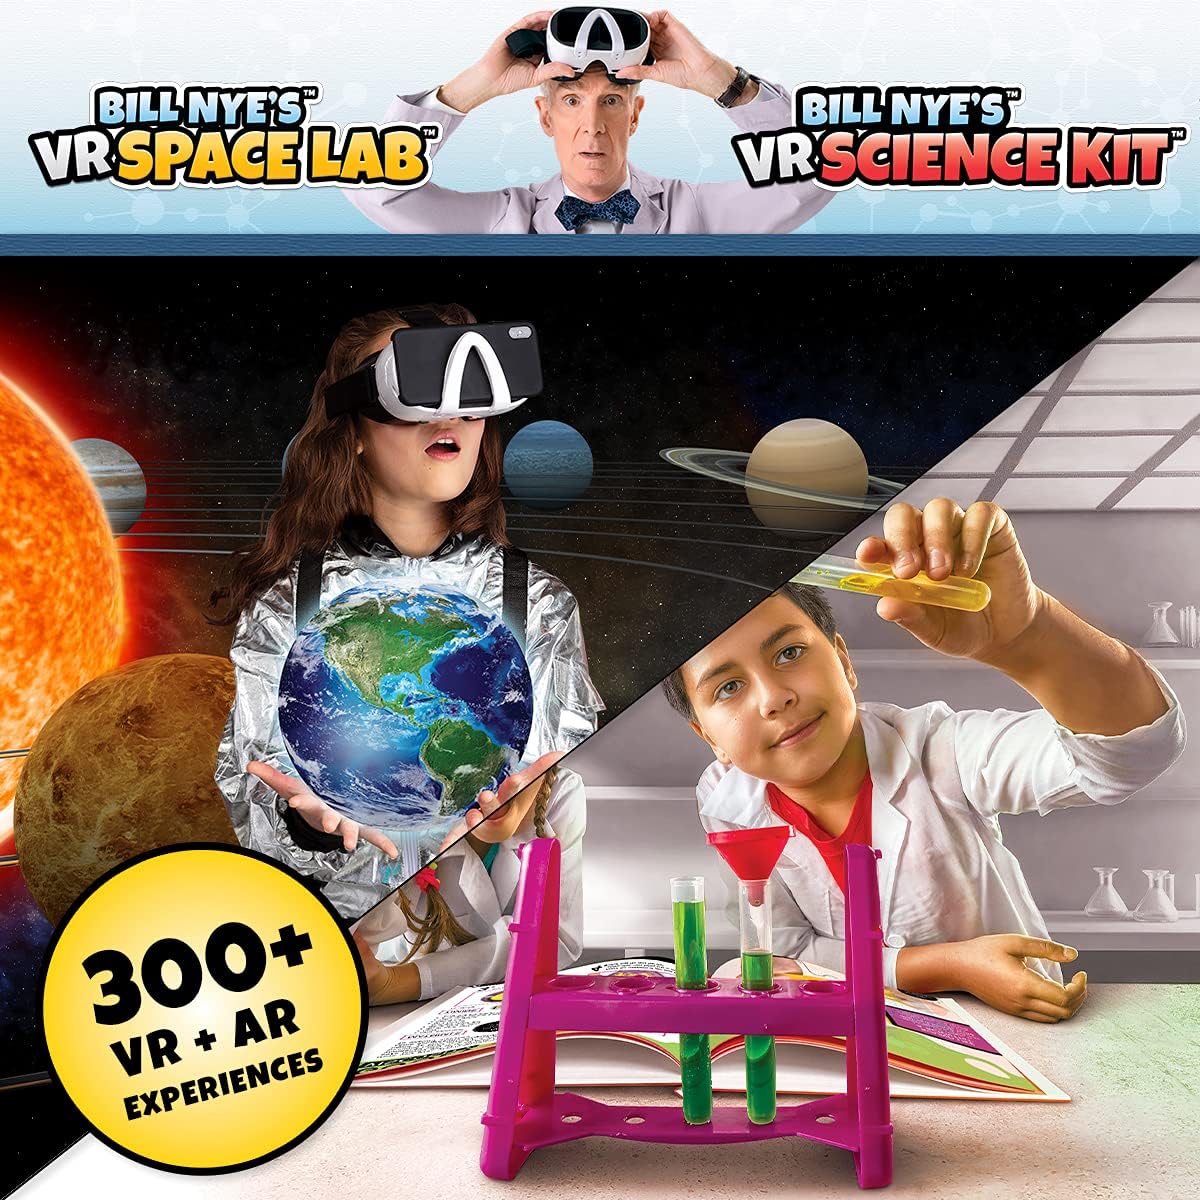 Bill Nye's Virtual Reality 2 in 1 Bundle Pack - VR Space Lab & Science Kit